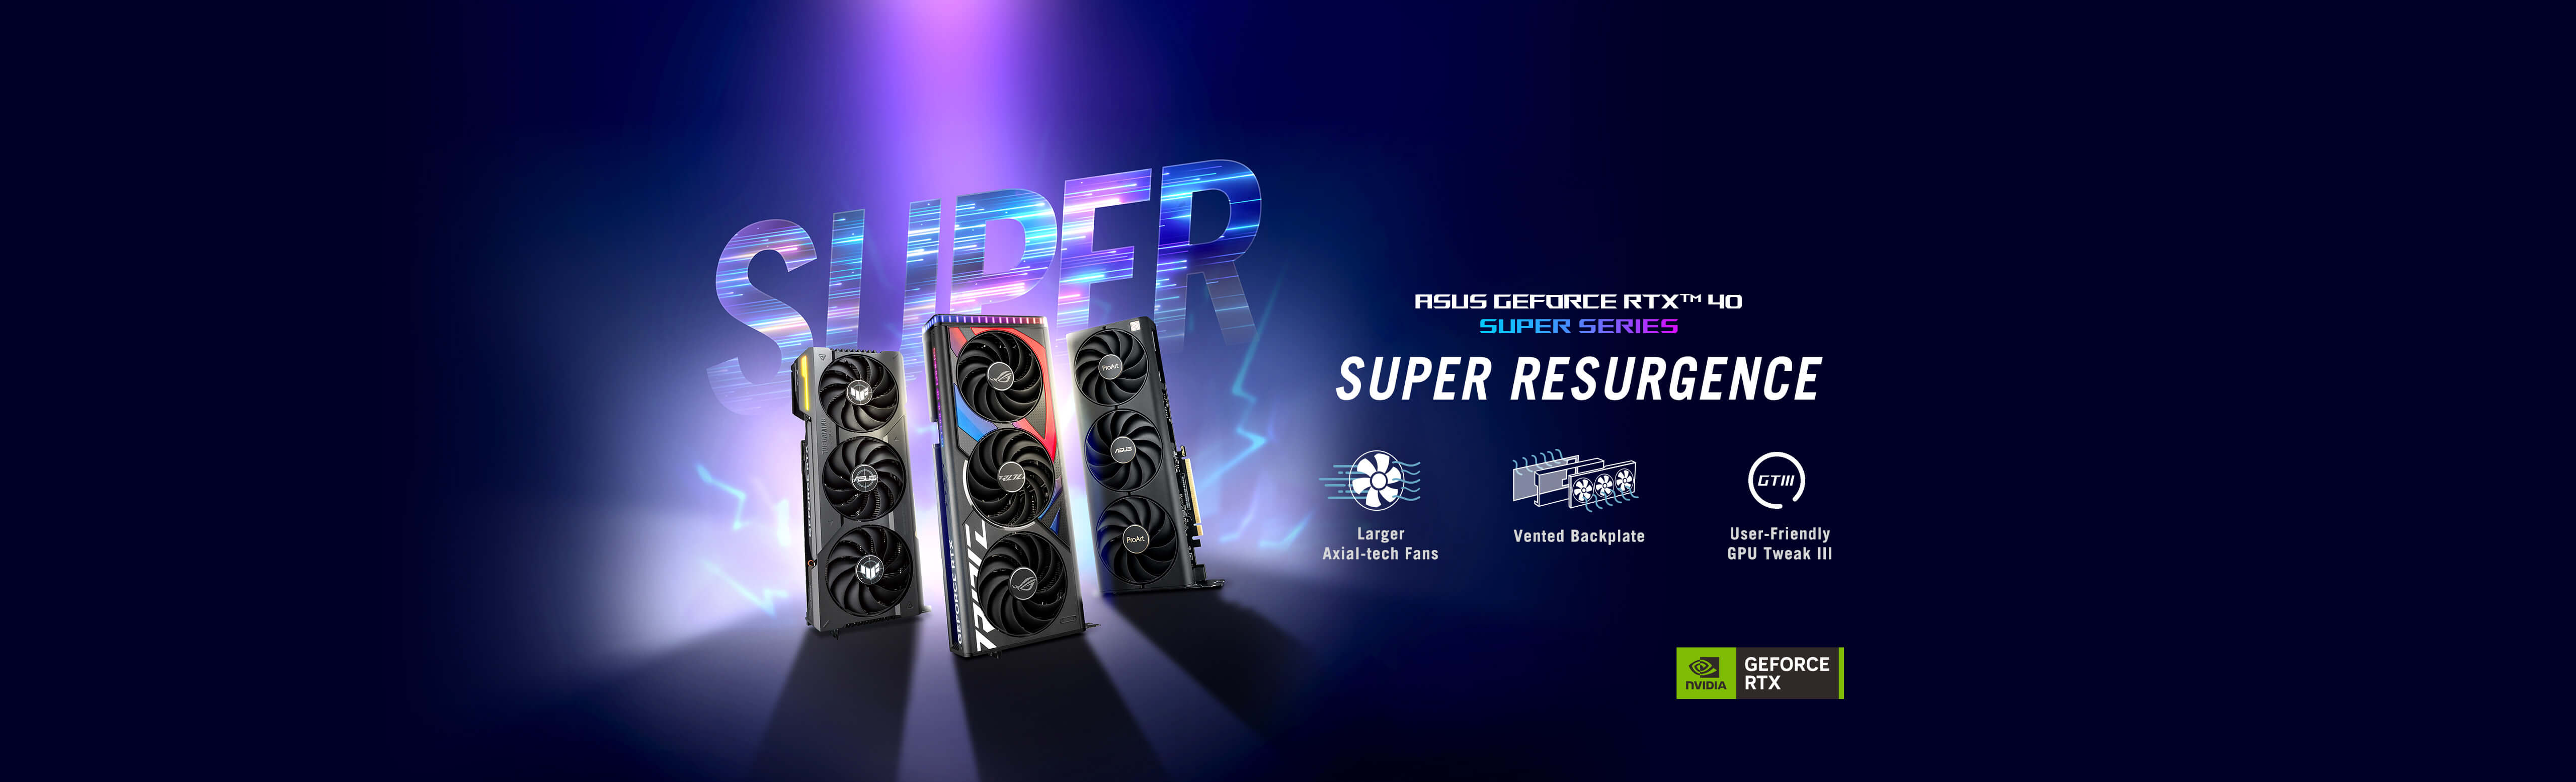 ASUS GeForce RTX™ 40 SUPER SERIE - SUPER HEROPLEVING, met grotere Axial-tech ventilatoren, geventileerde achterplaat en gebruiksvriendelijke GPU Tweak III